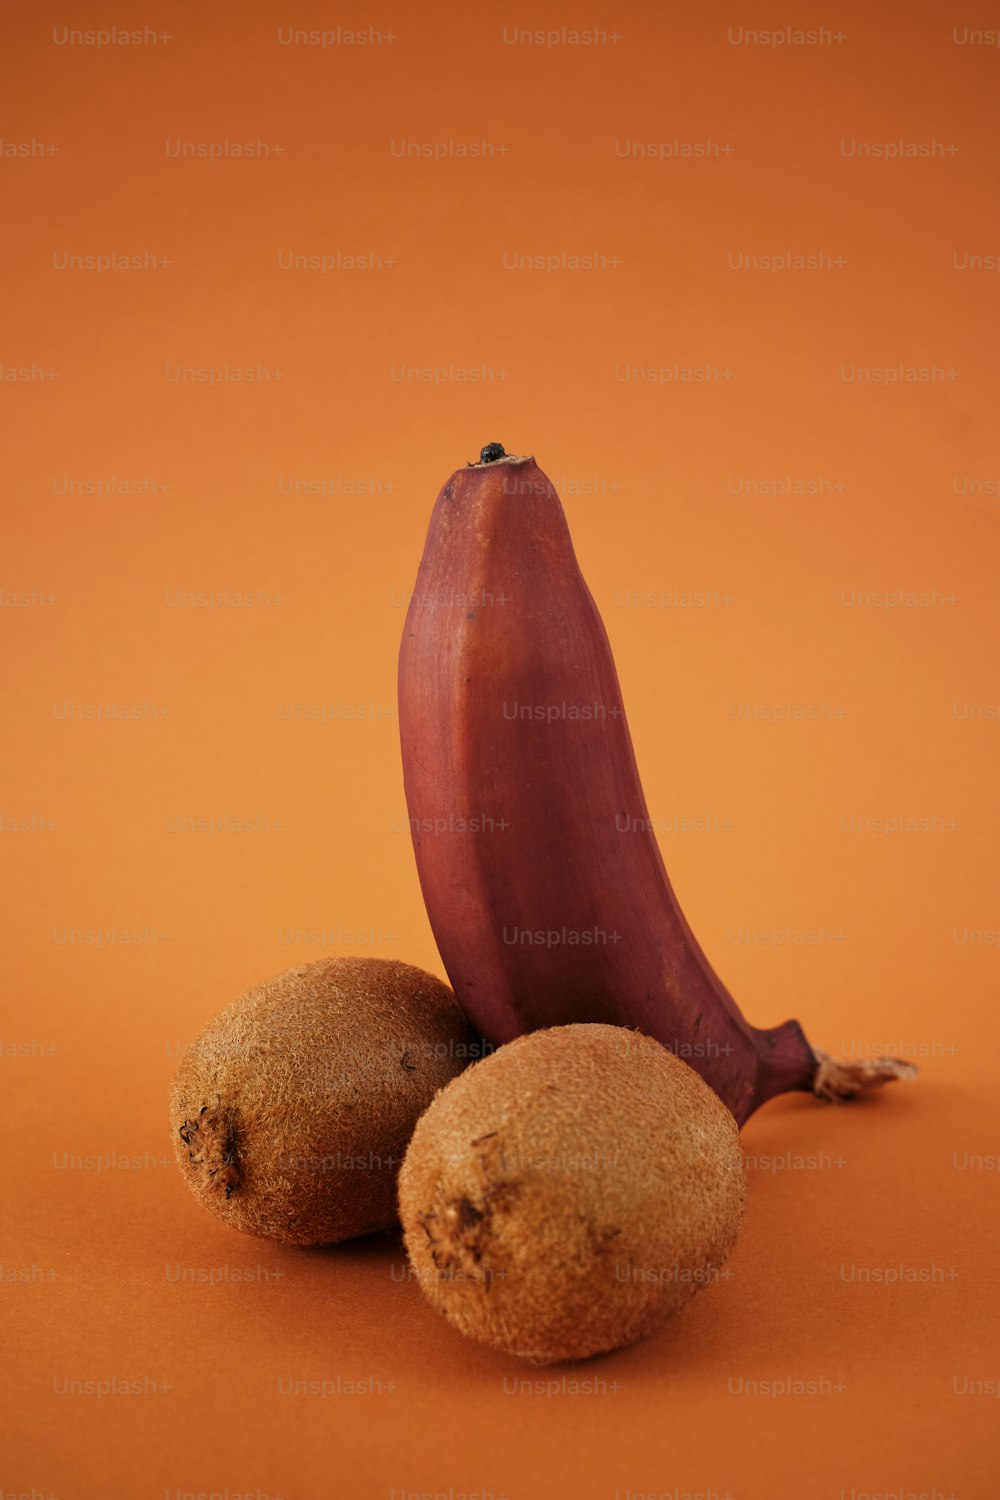 a banana and two kiwis on an orange background